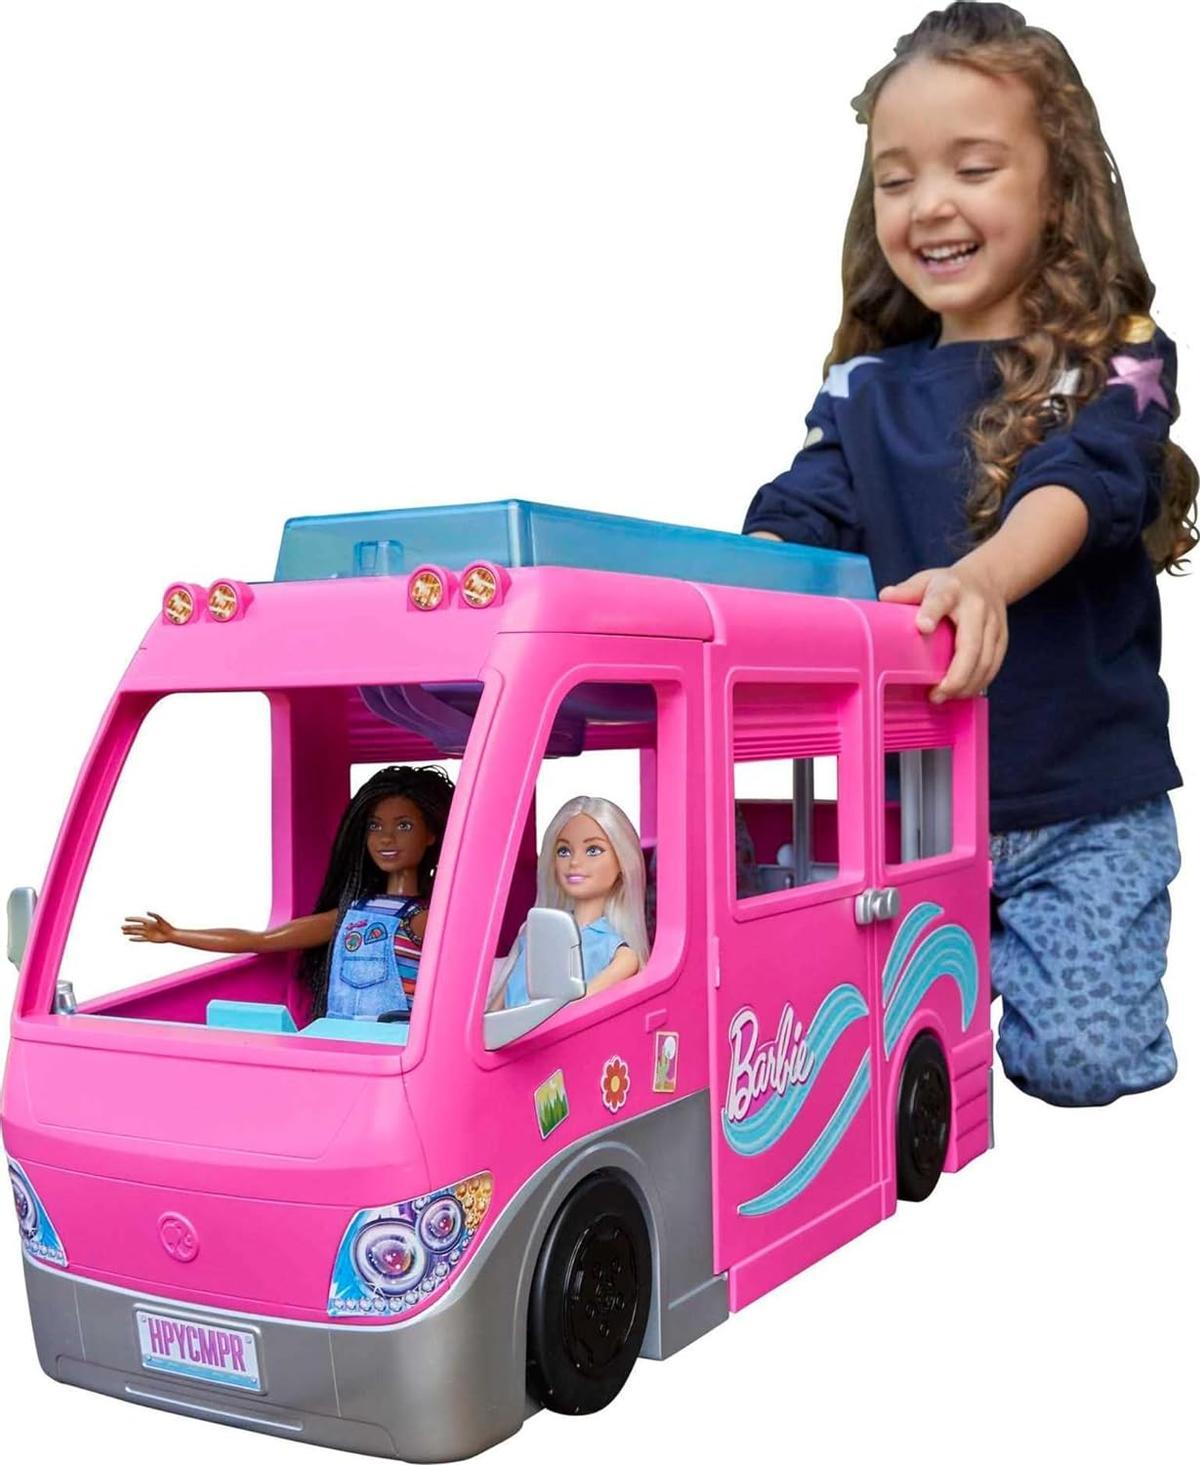 Barbie caravana